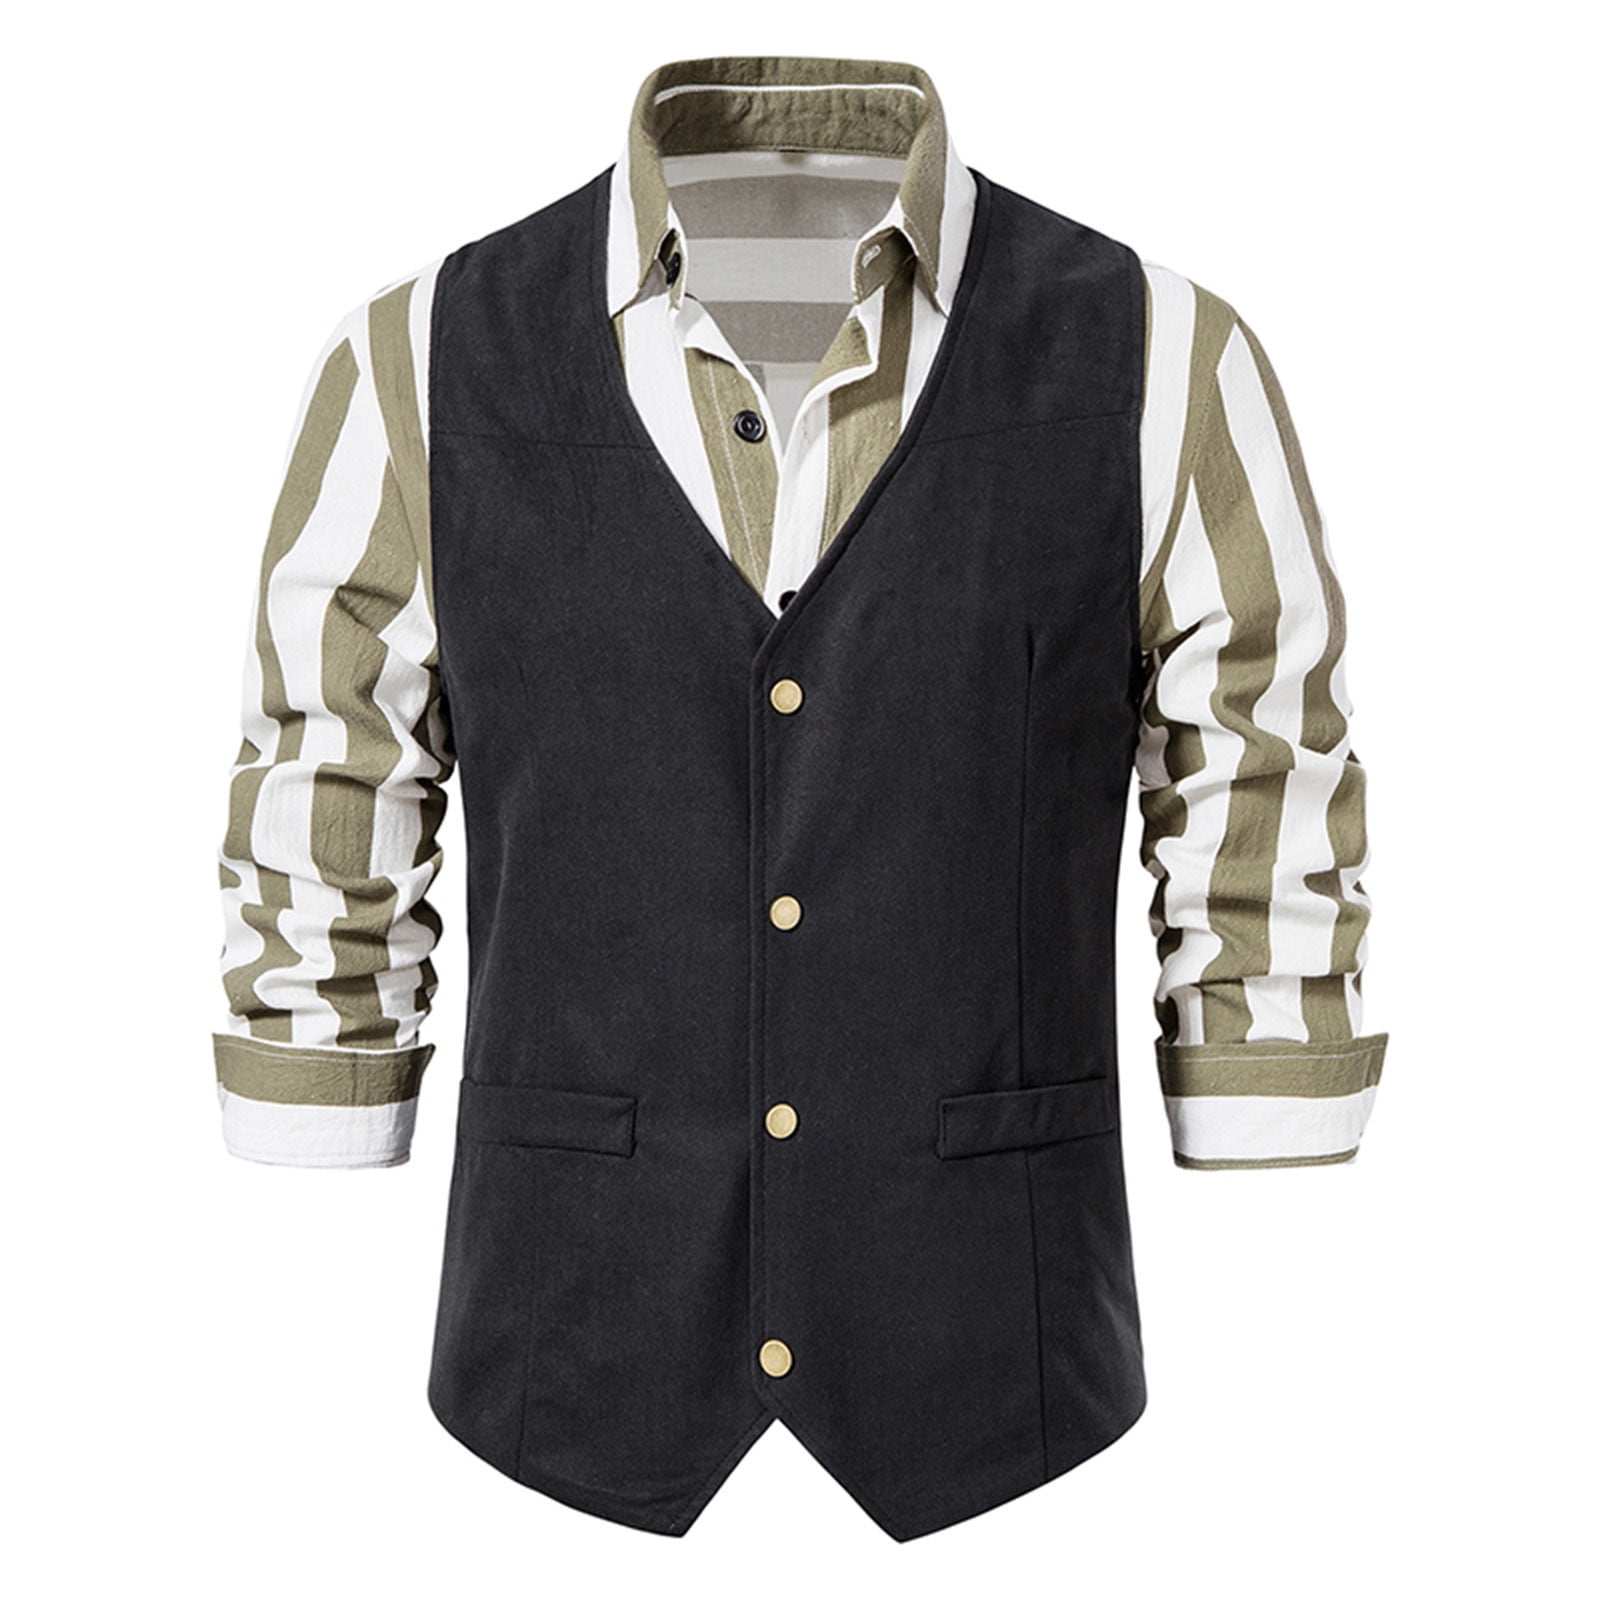 VSSSJ Men's Basic Vest with Pocket Regular Fit Cowboy Style V-Neck  Sleeveless Solid Color Button Down Jackets Fashion Retro Wedding Party  Jacket Black ...